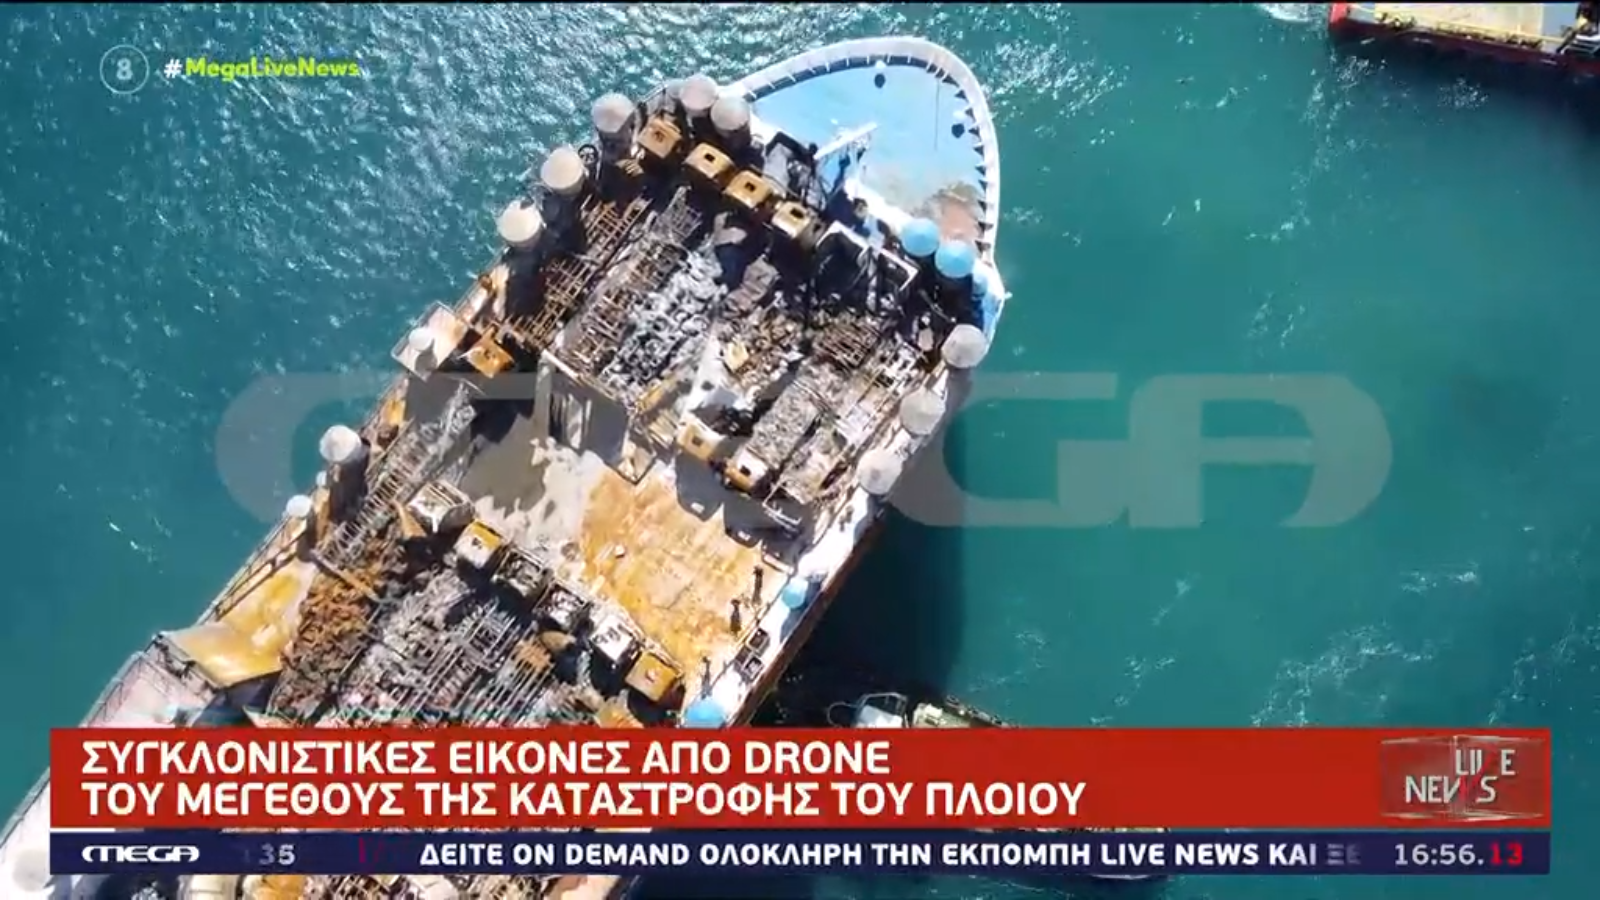 Euroferry Olympia: Εικόνες ολικής καταστροφής από drone – Τι είπε στο Mega ο Λευκορώσος οδηγός που σώθηκε;